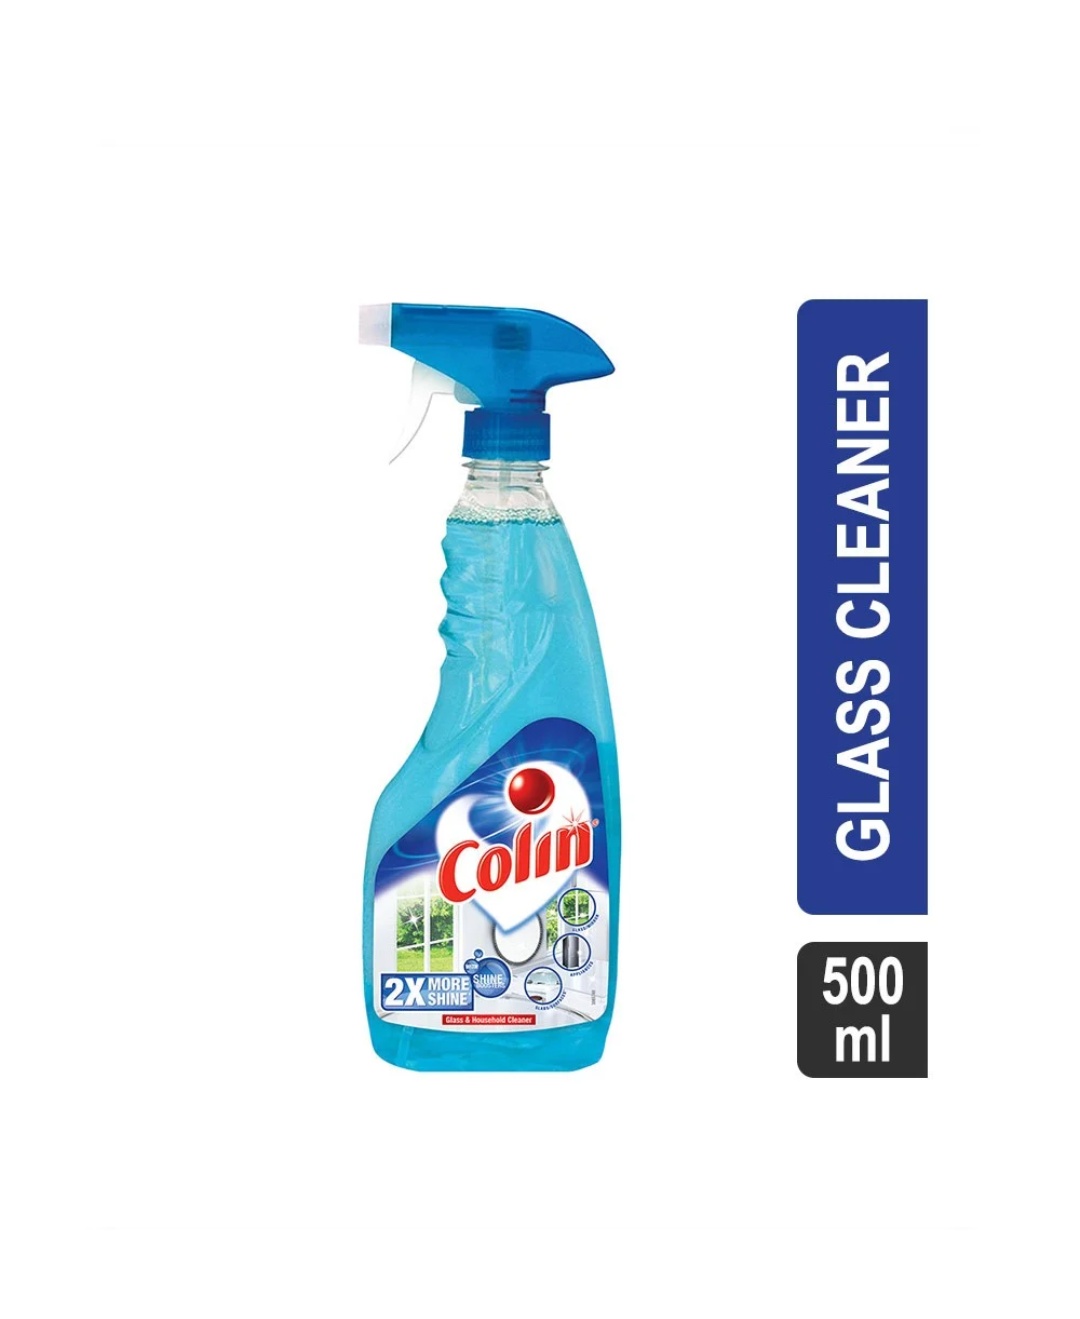 Colin 2x More Shine Glass Cleaner, 500 ml